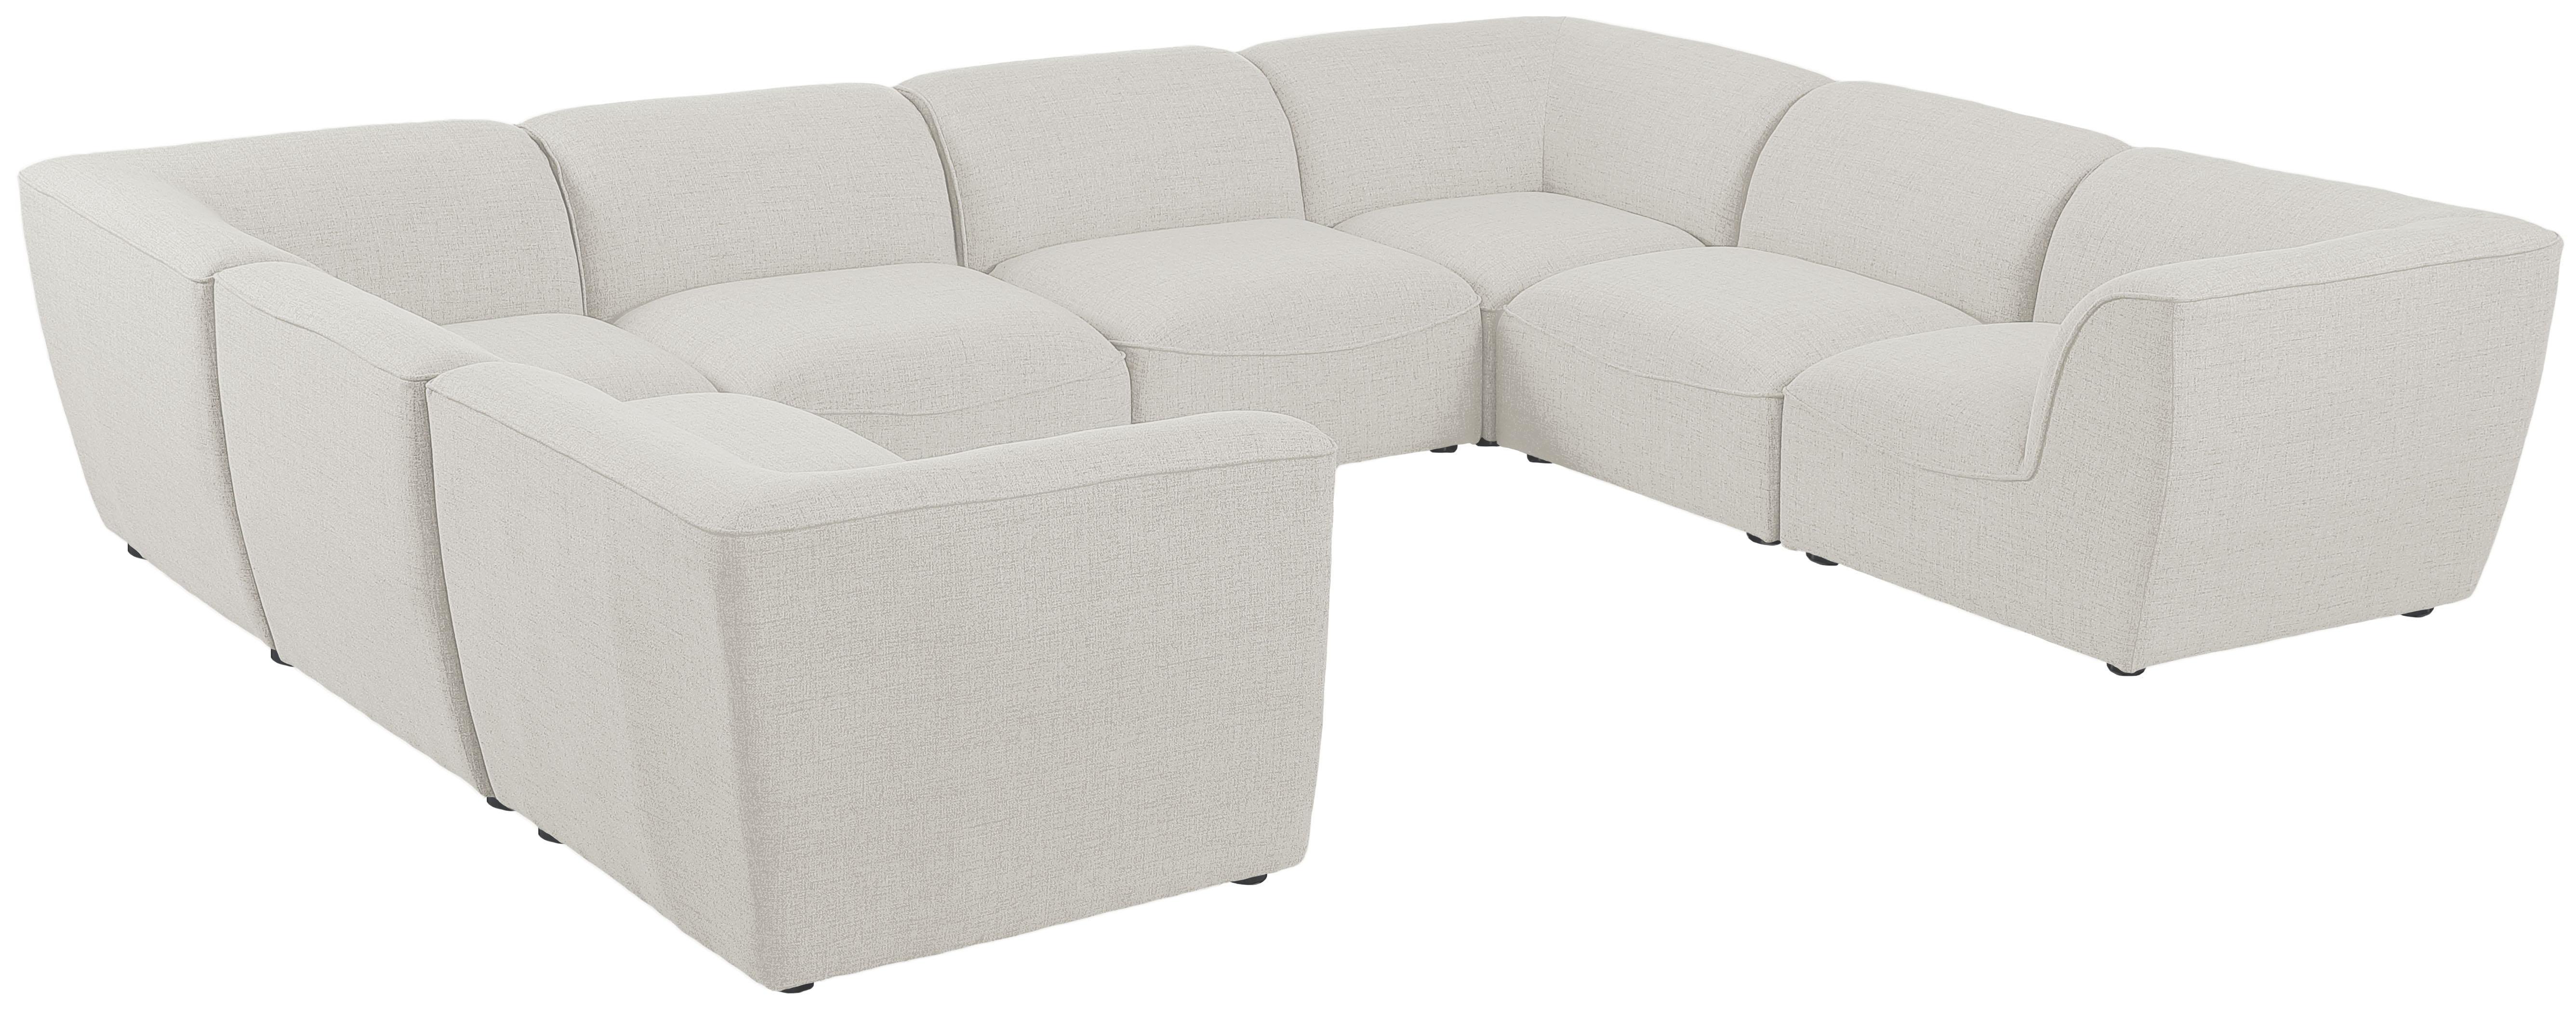 Meridian Furniture - Miramar - Modular Sectional 8 Piece - Cream - 5th Avenue Furniture